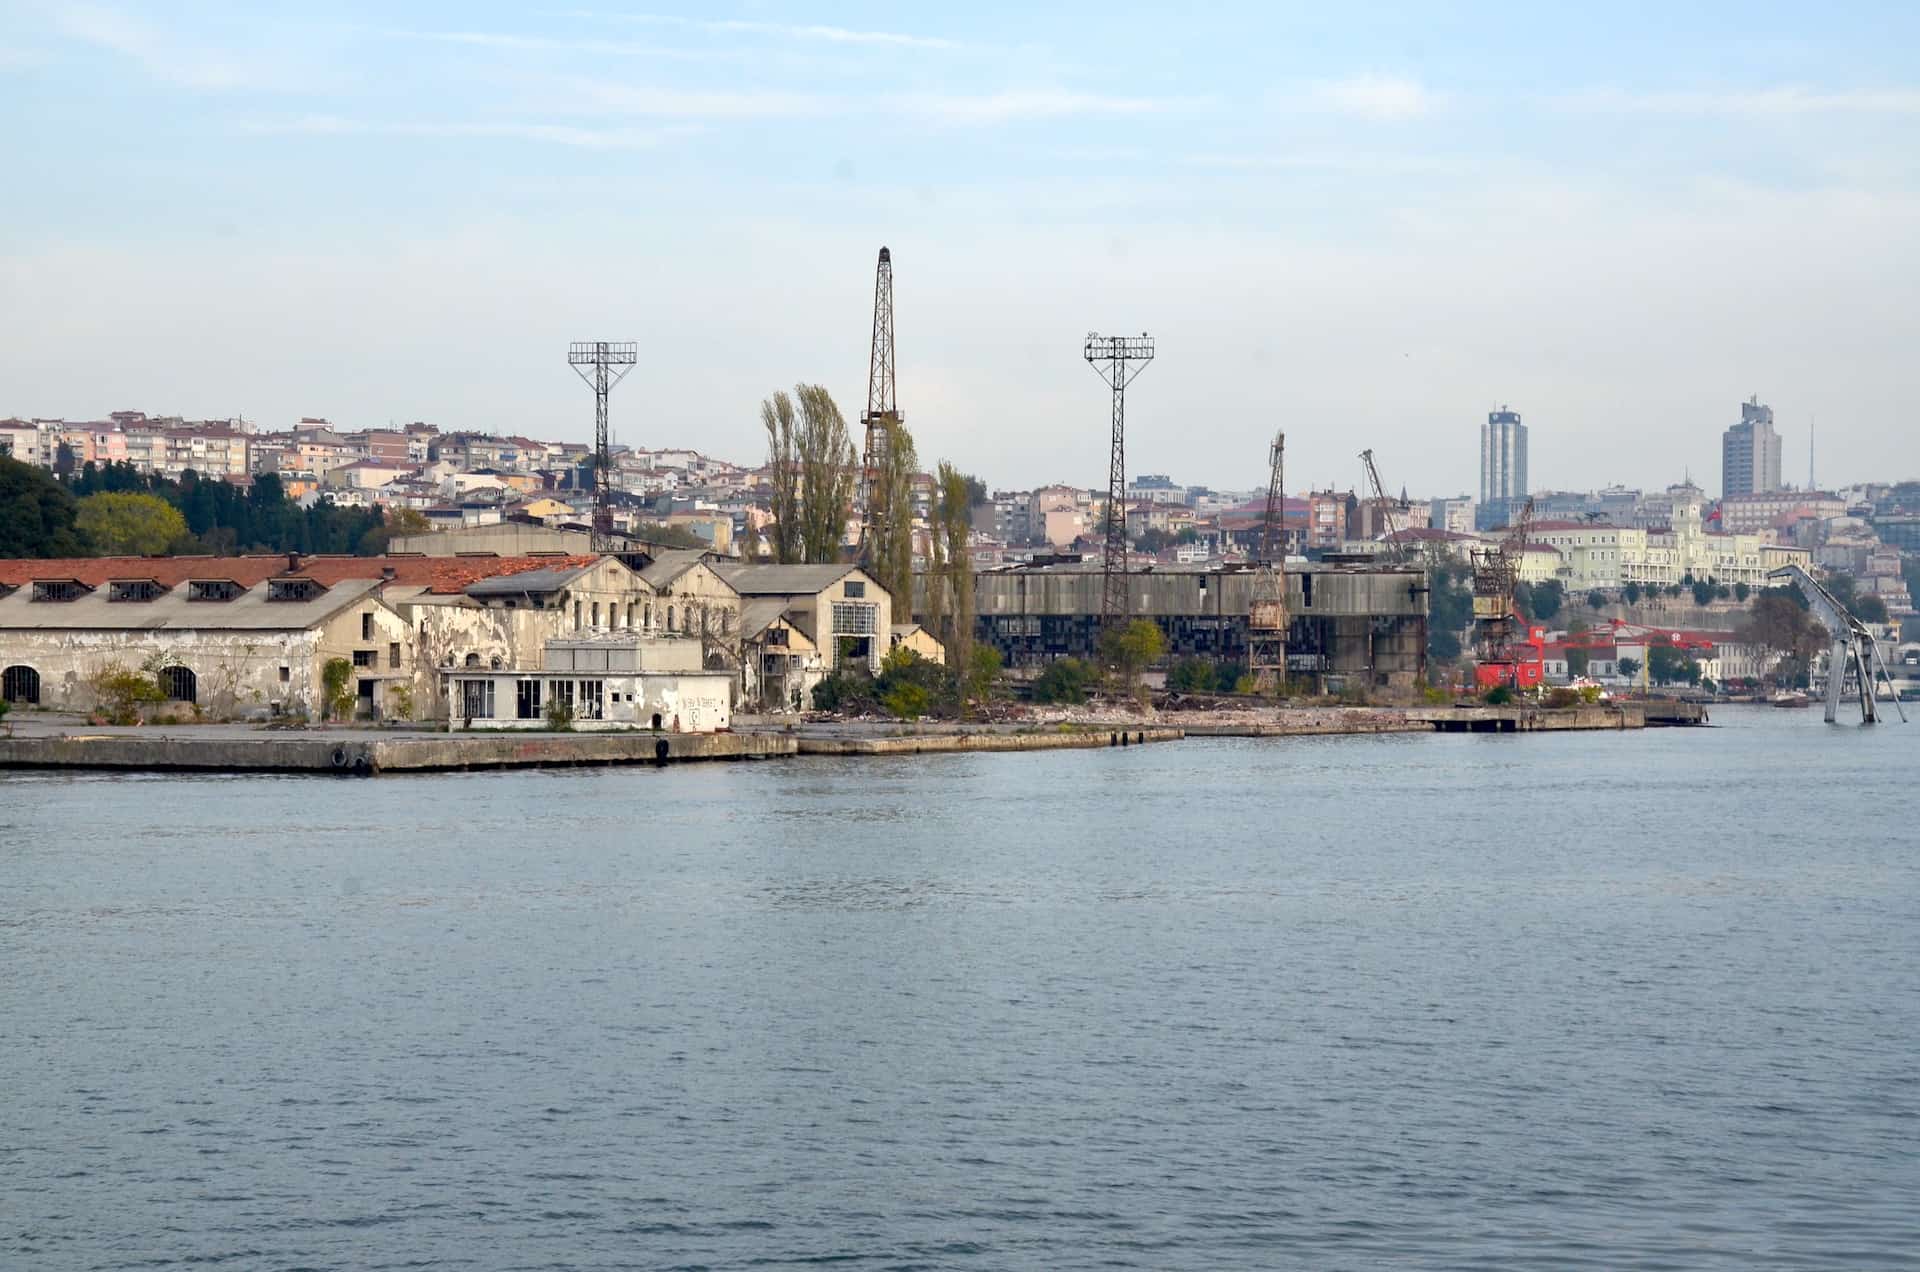 Imperial Shipyard in Istanbul, Turkey